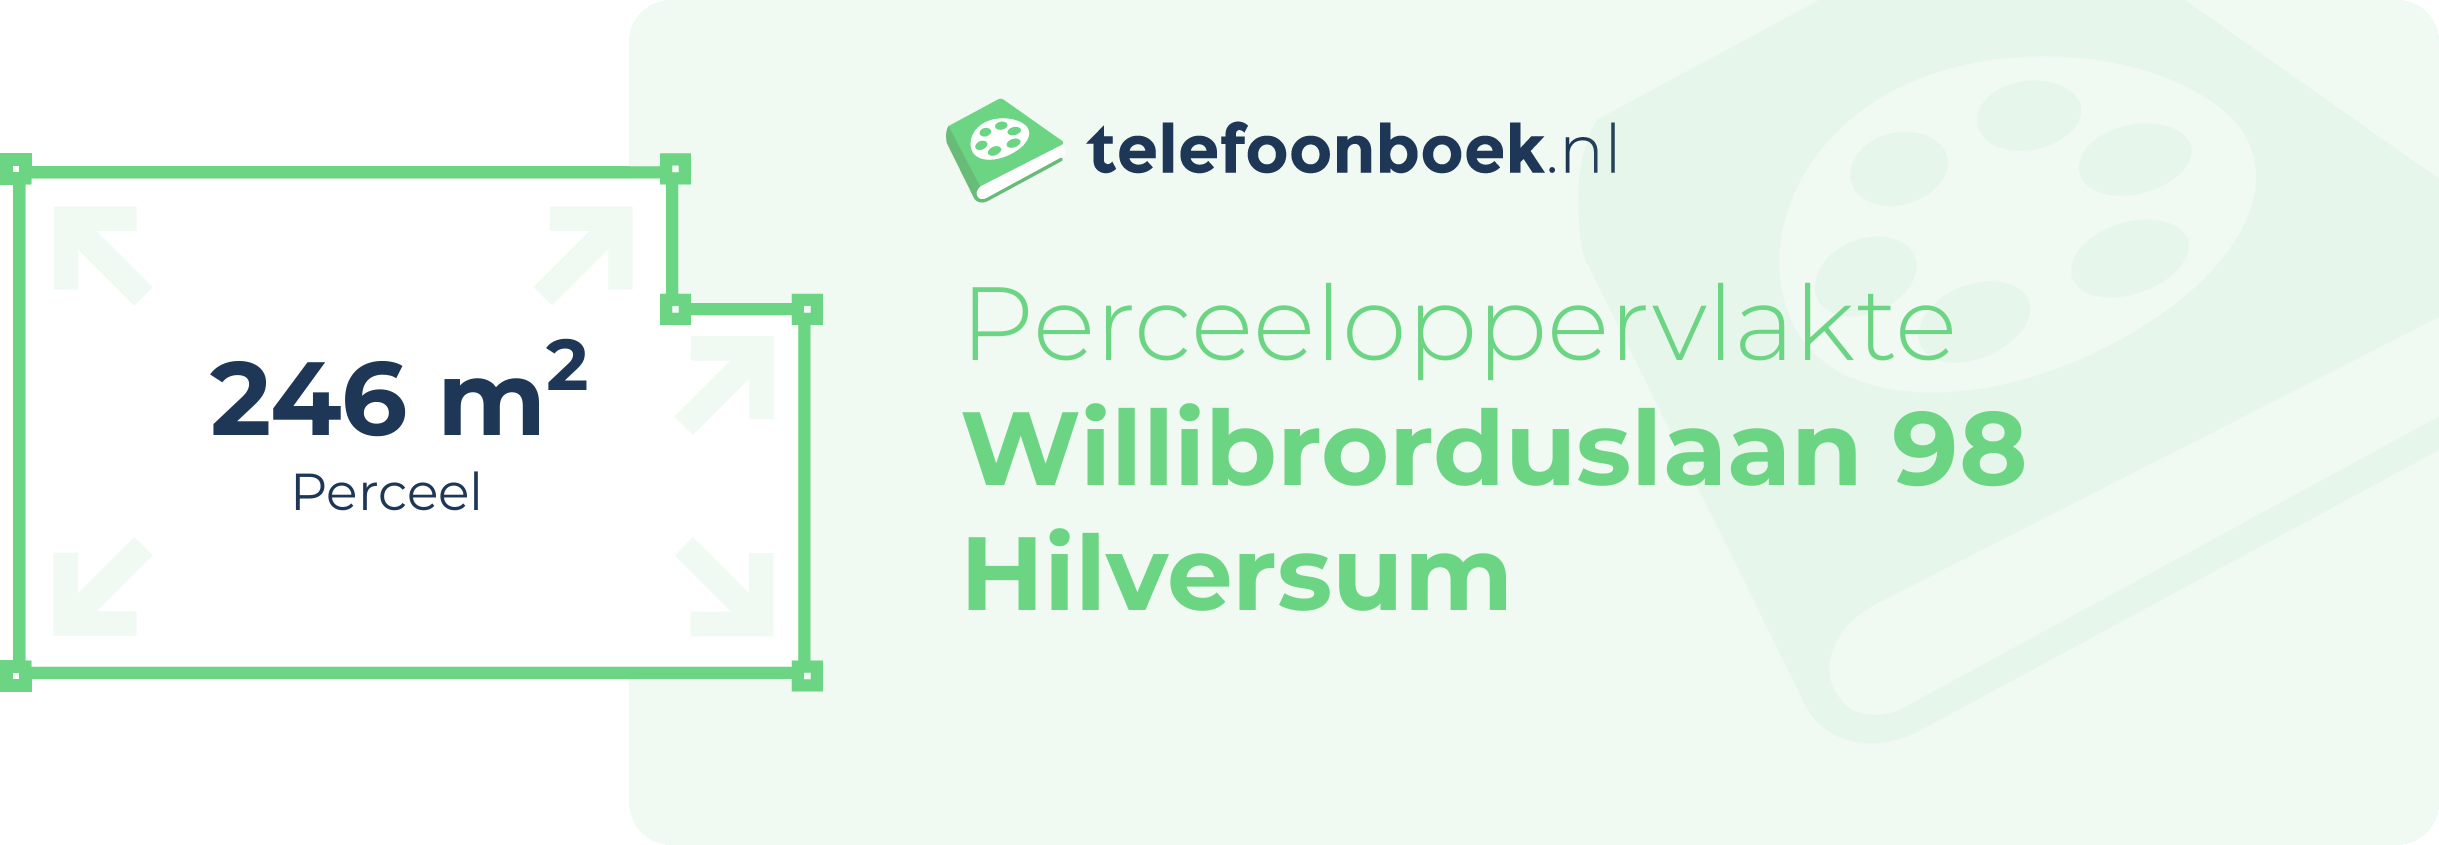 Perceeloppervlakte Willibrorduslaan 98 Hilversum